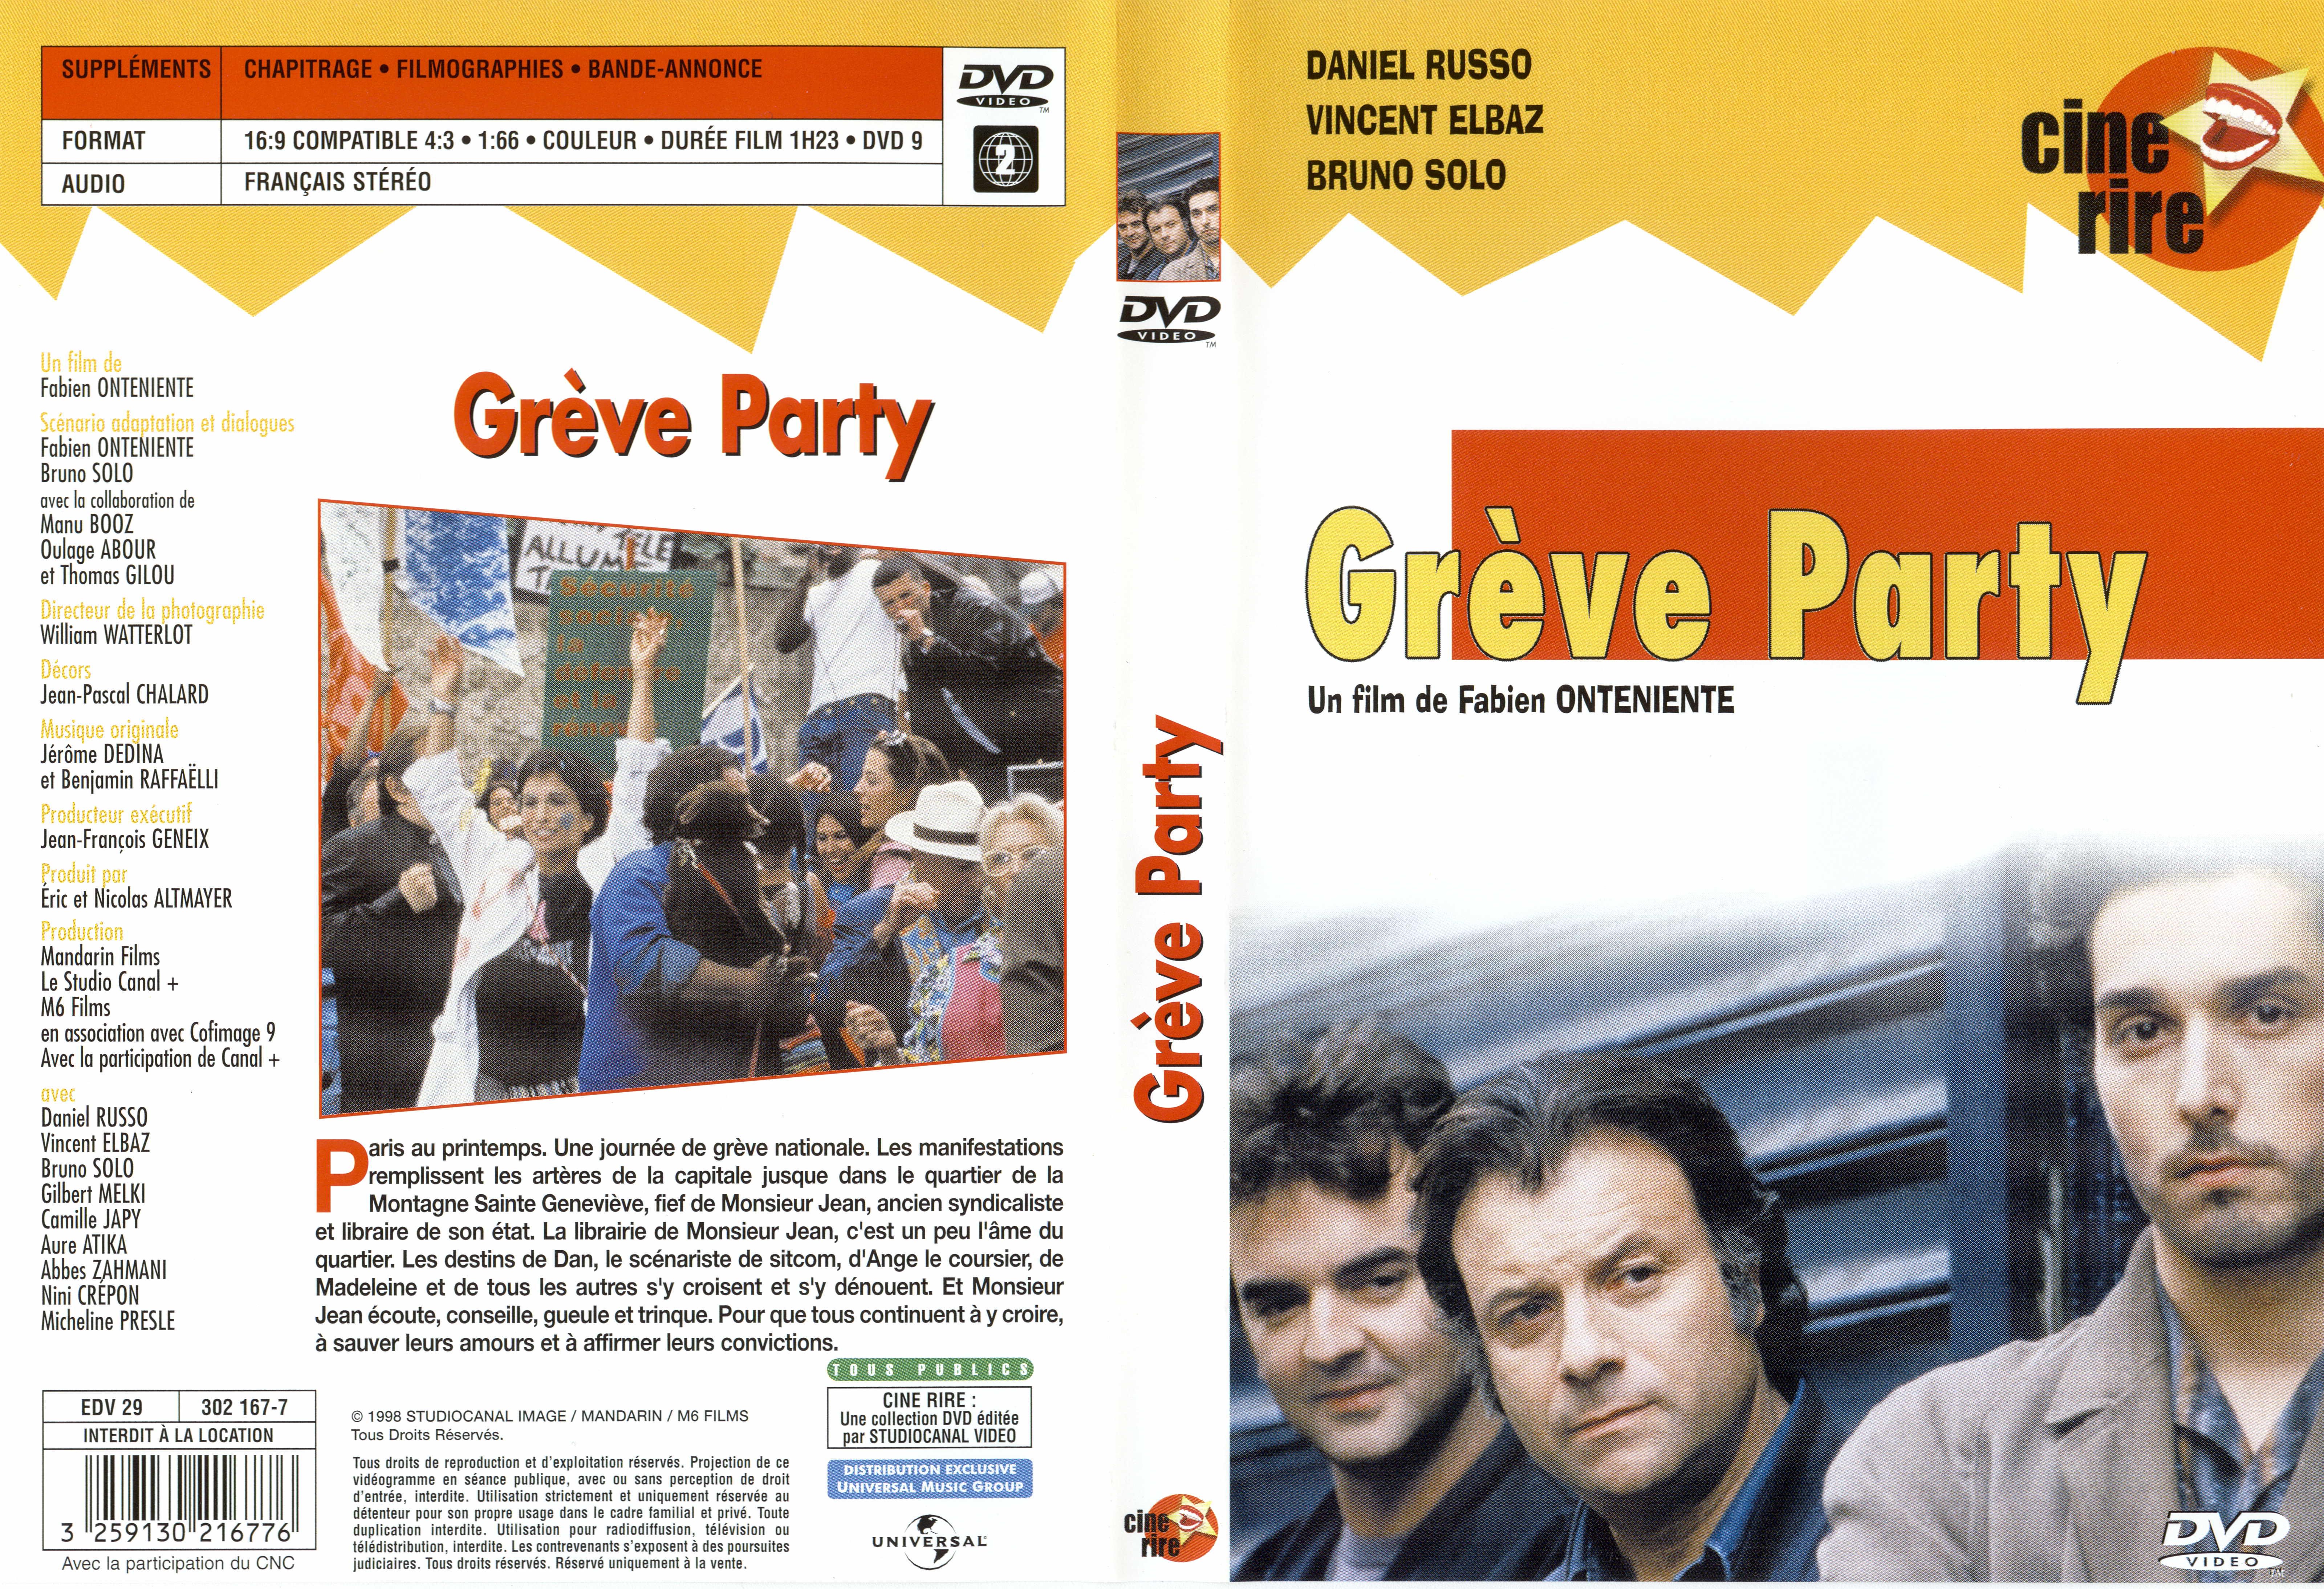 Jaquette DVD Grve party